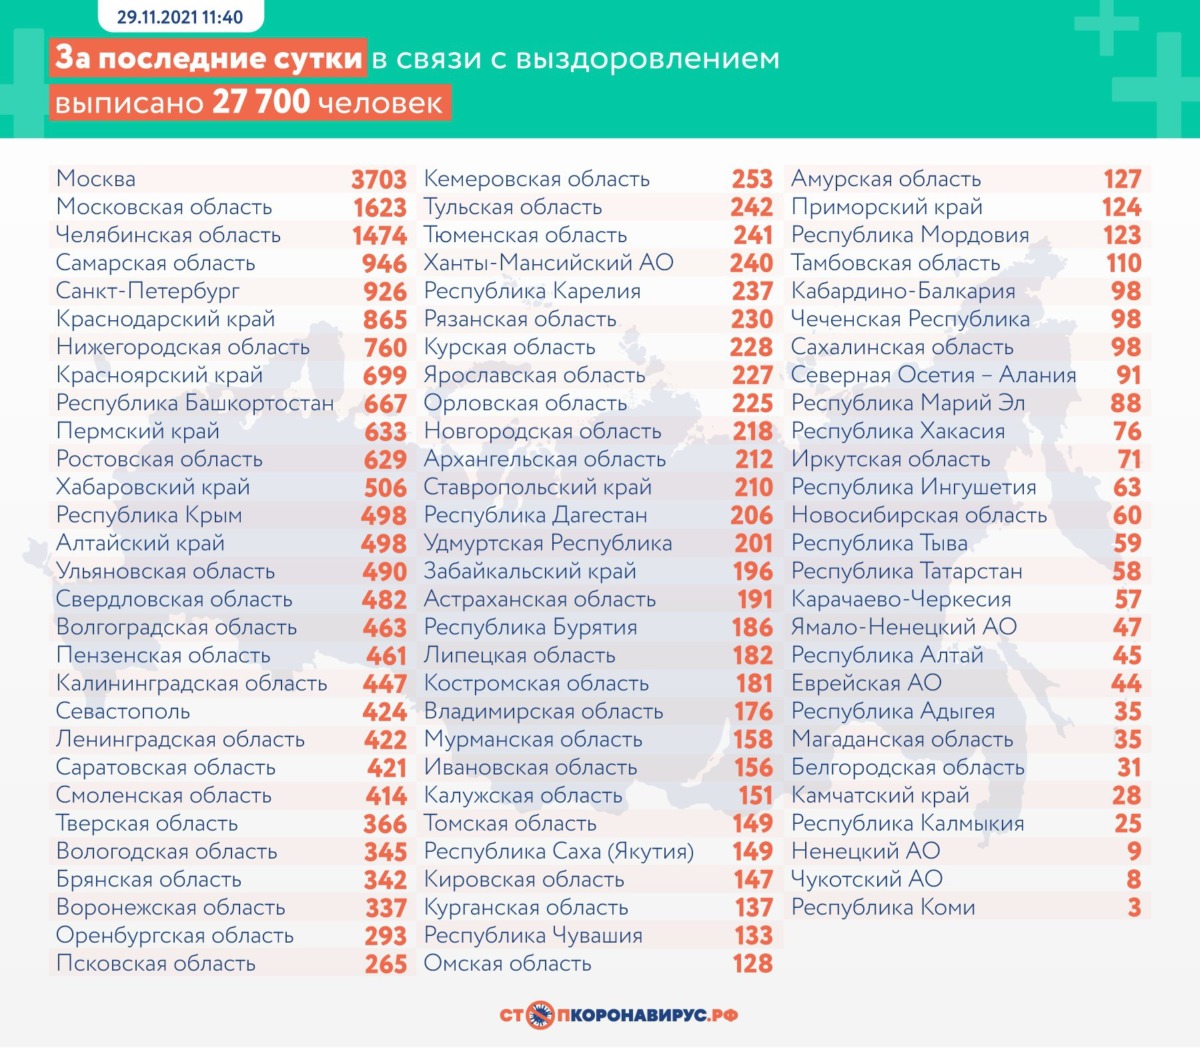 Оперативная статистика по коронавирусу в России на 29 ноября